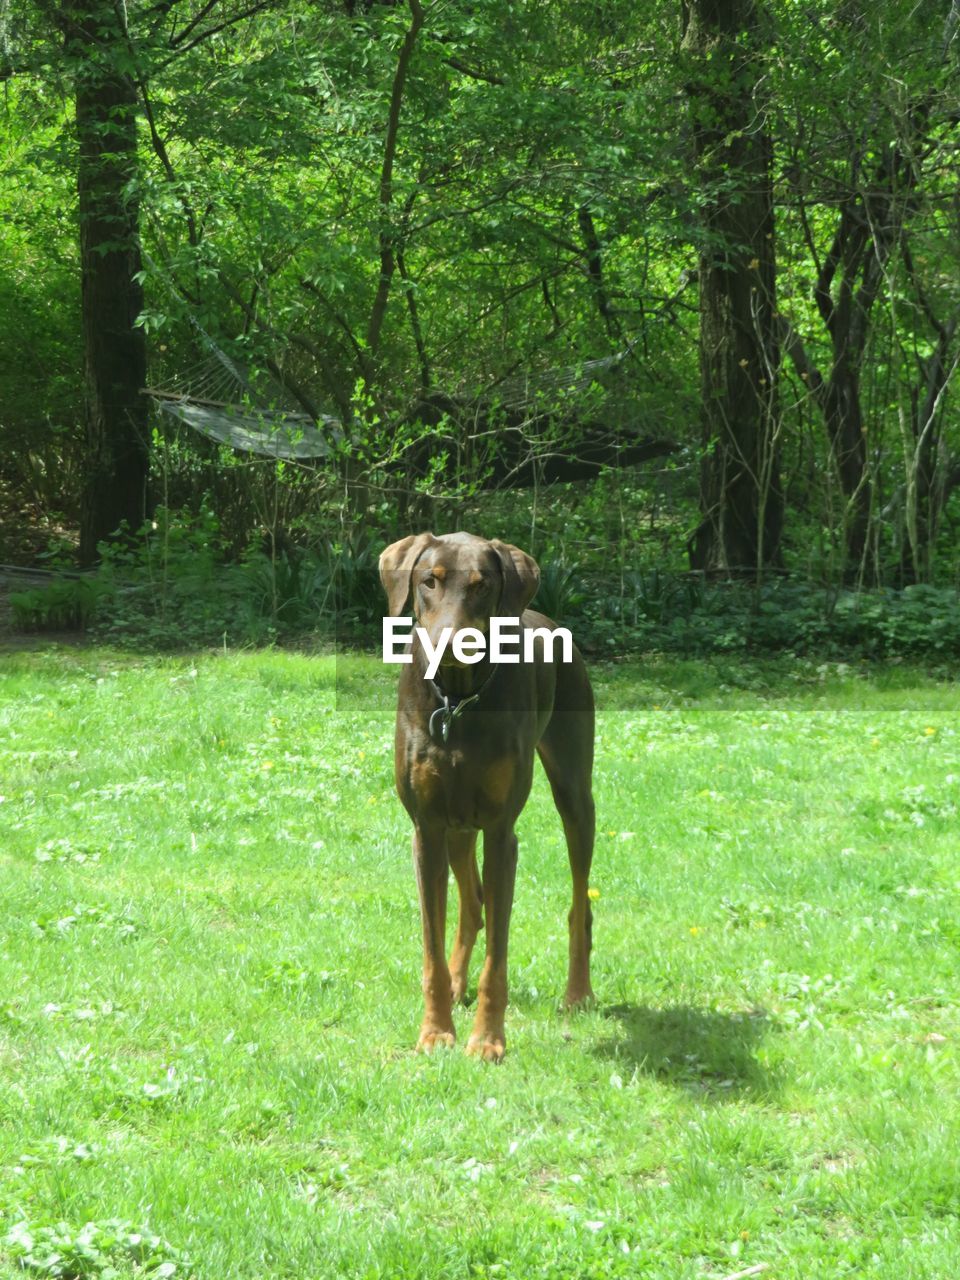 VIEW OF DOG STANDING ON GRASSY FIELD